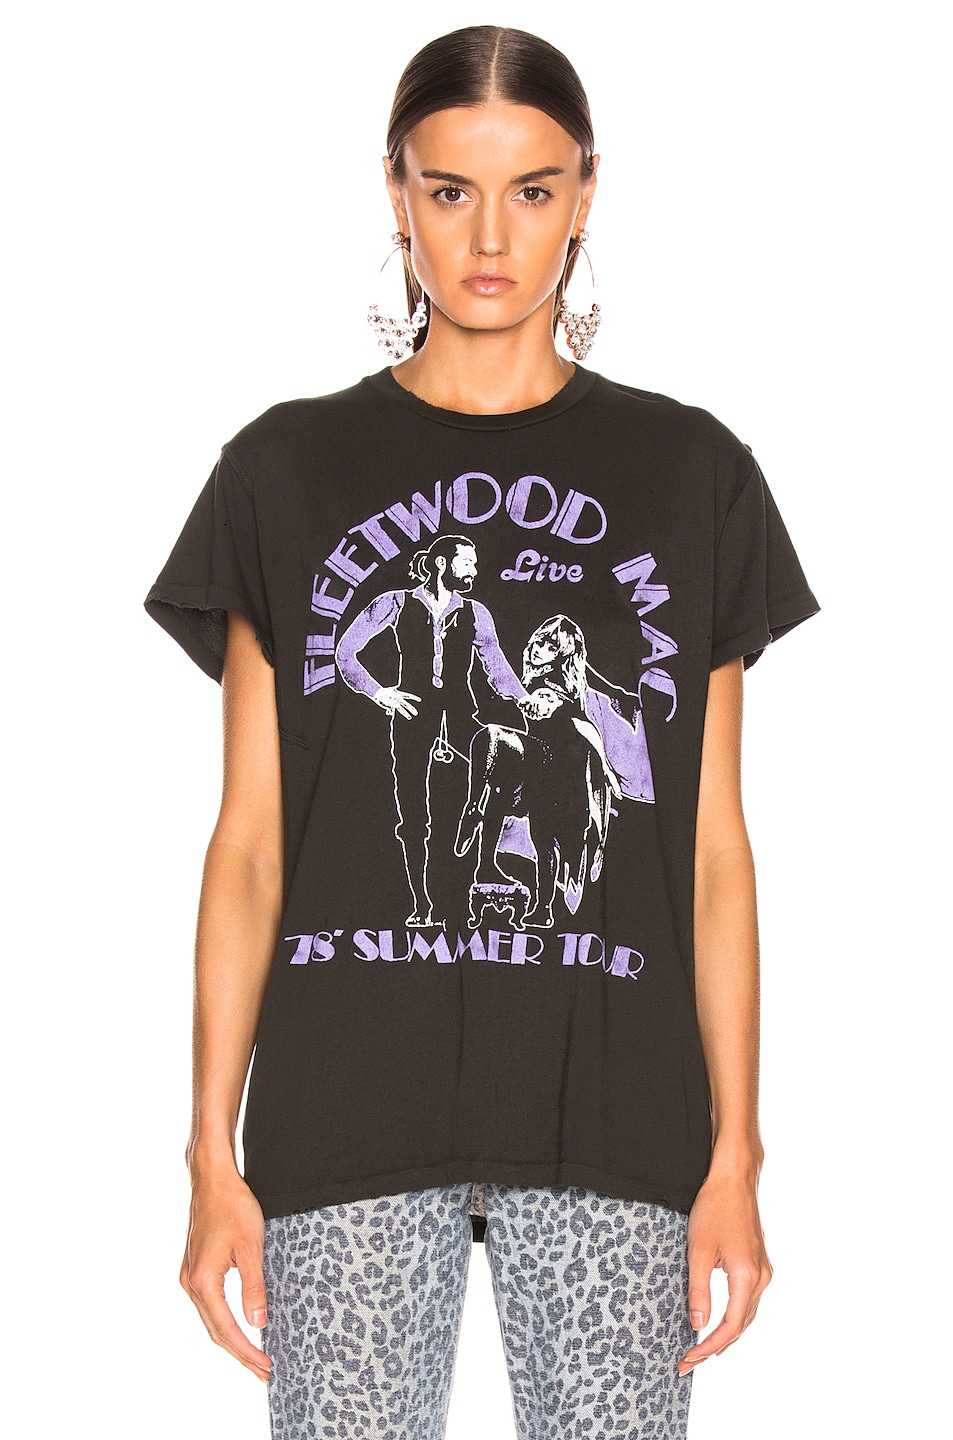 Madeworn Fleetwood Mac '78 Summer Tour Tee in Dirty Black | FWRD